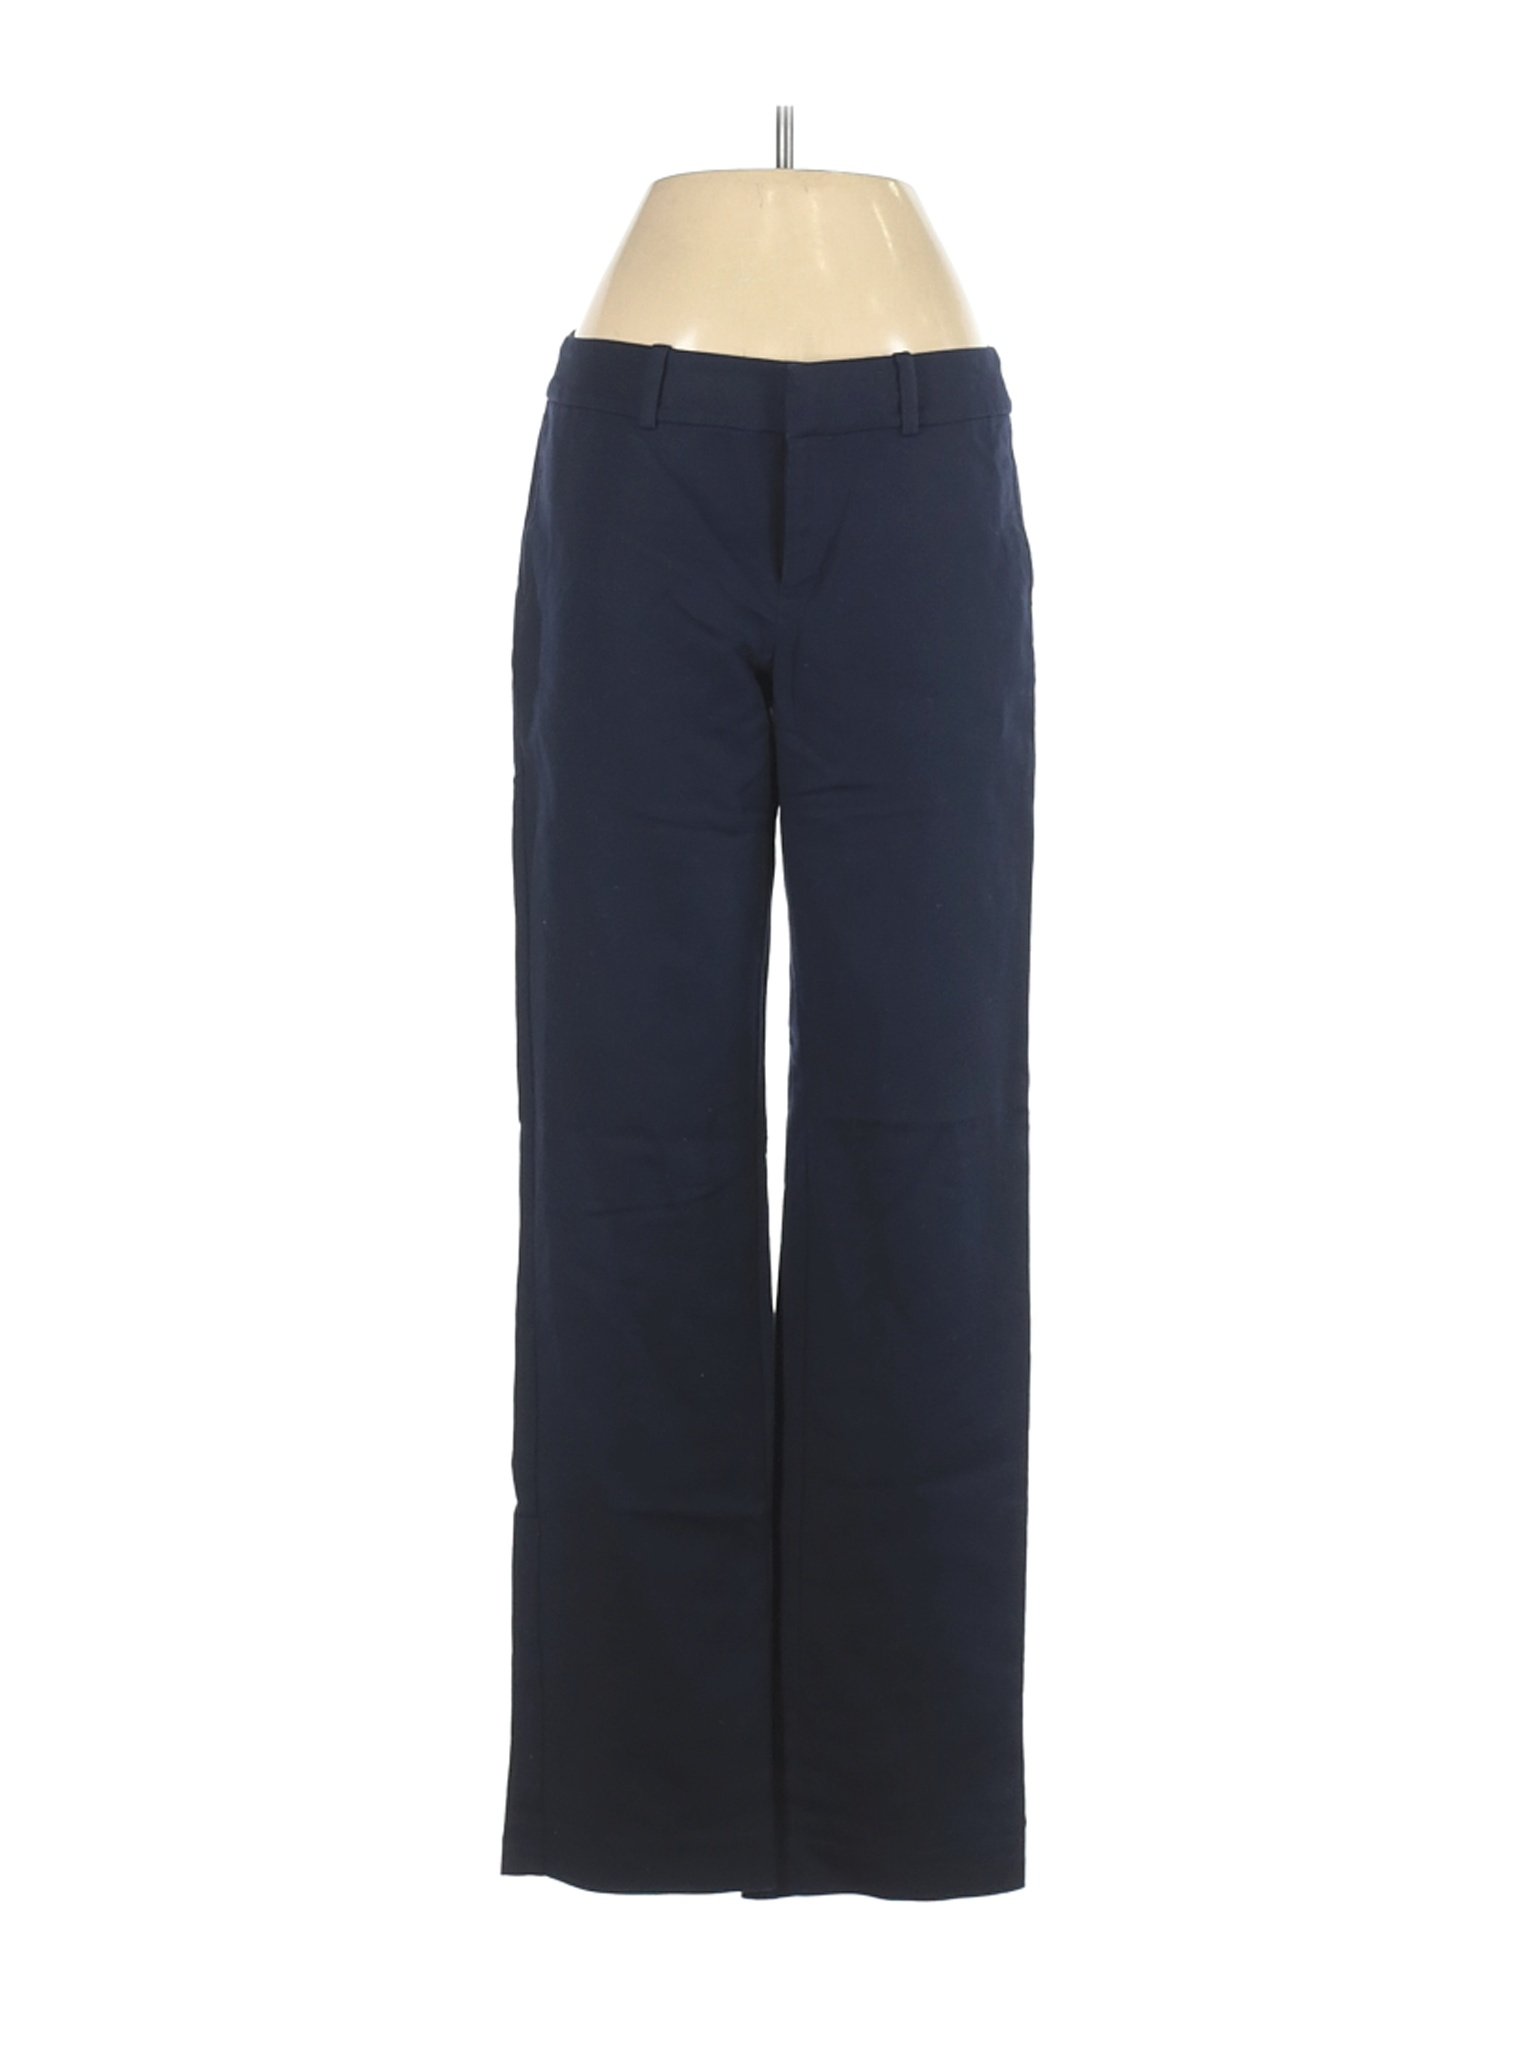 Merona Women Blue Casual Pants 4 | eBay